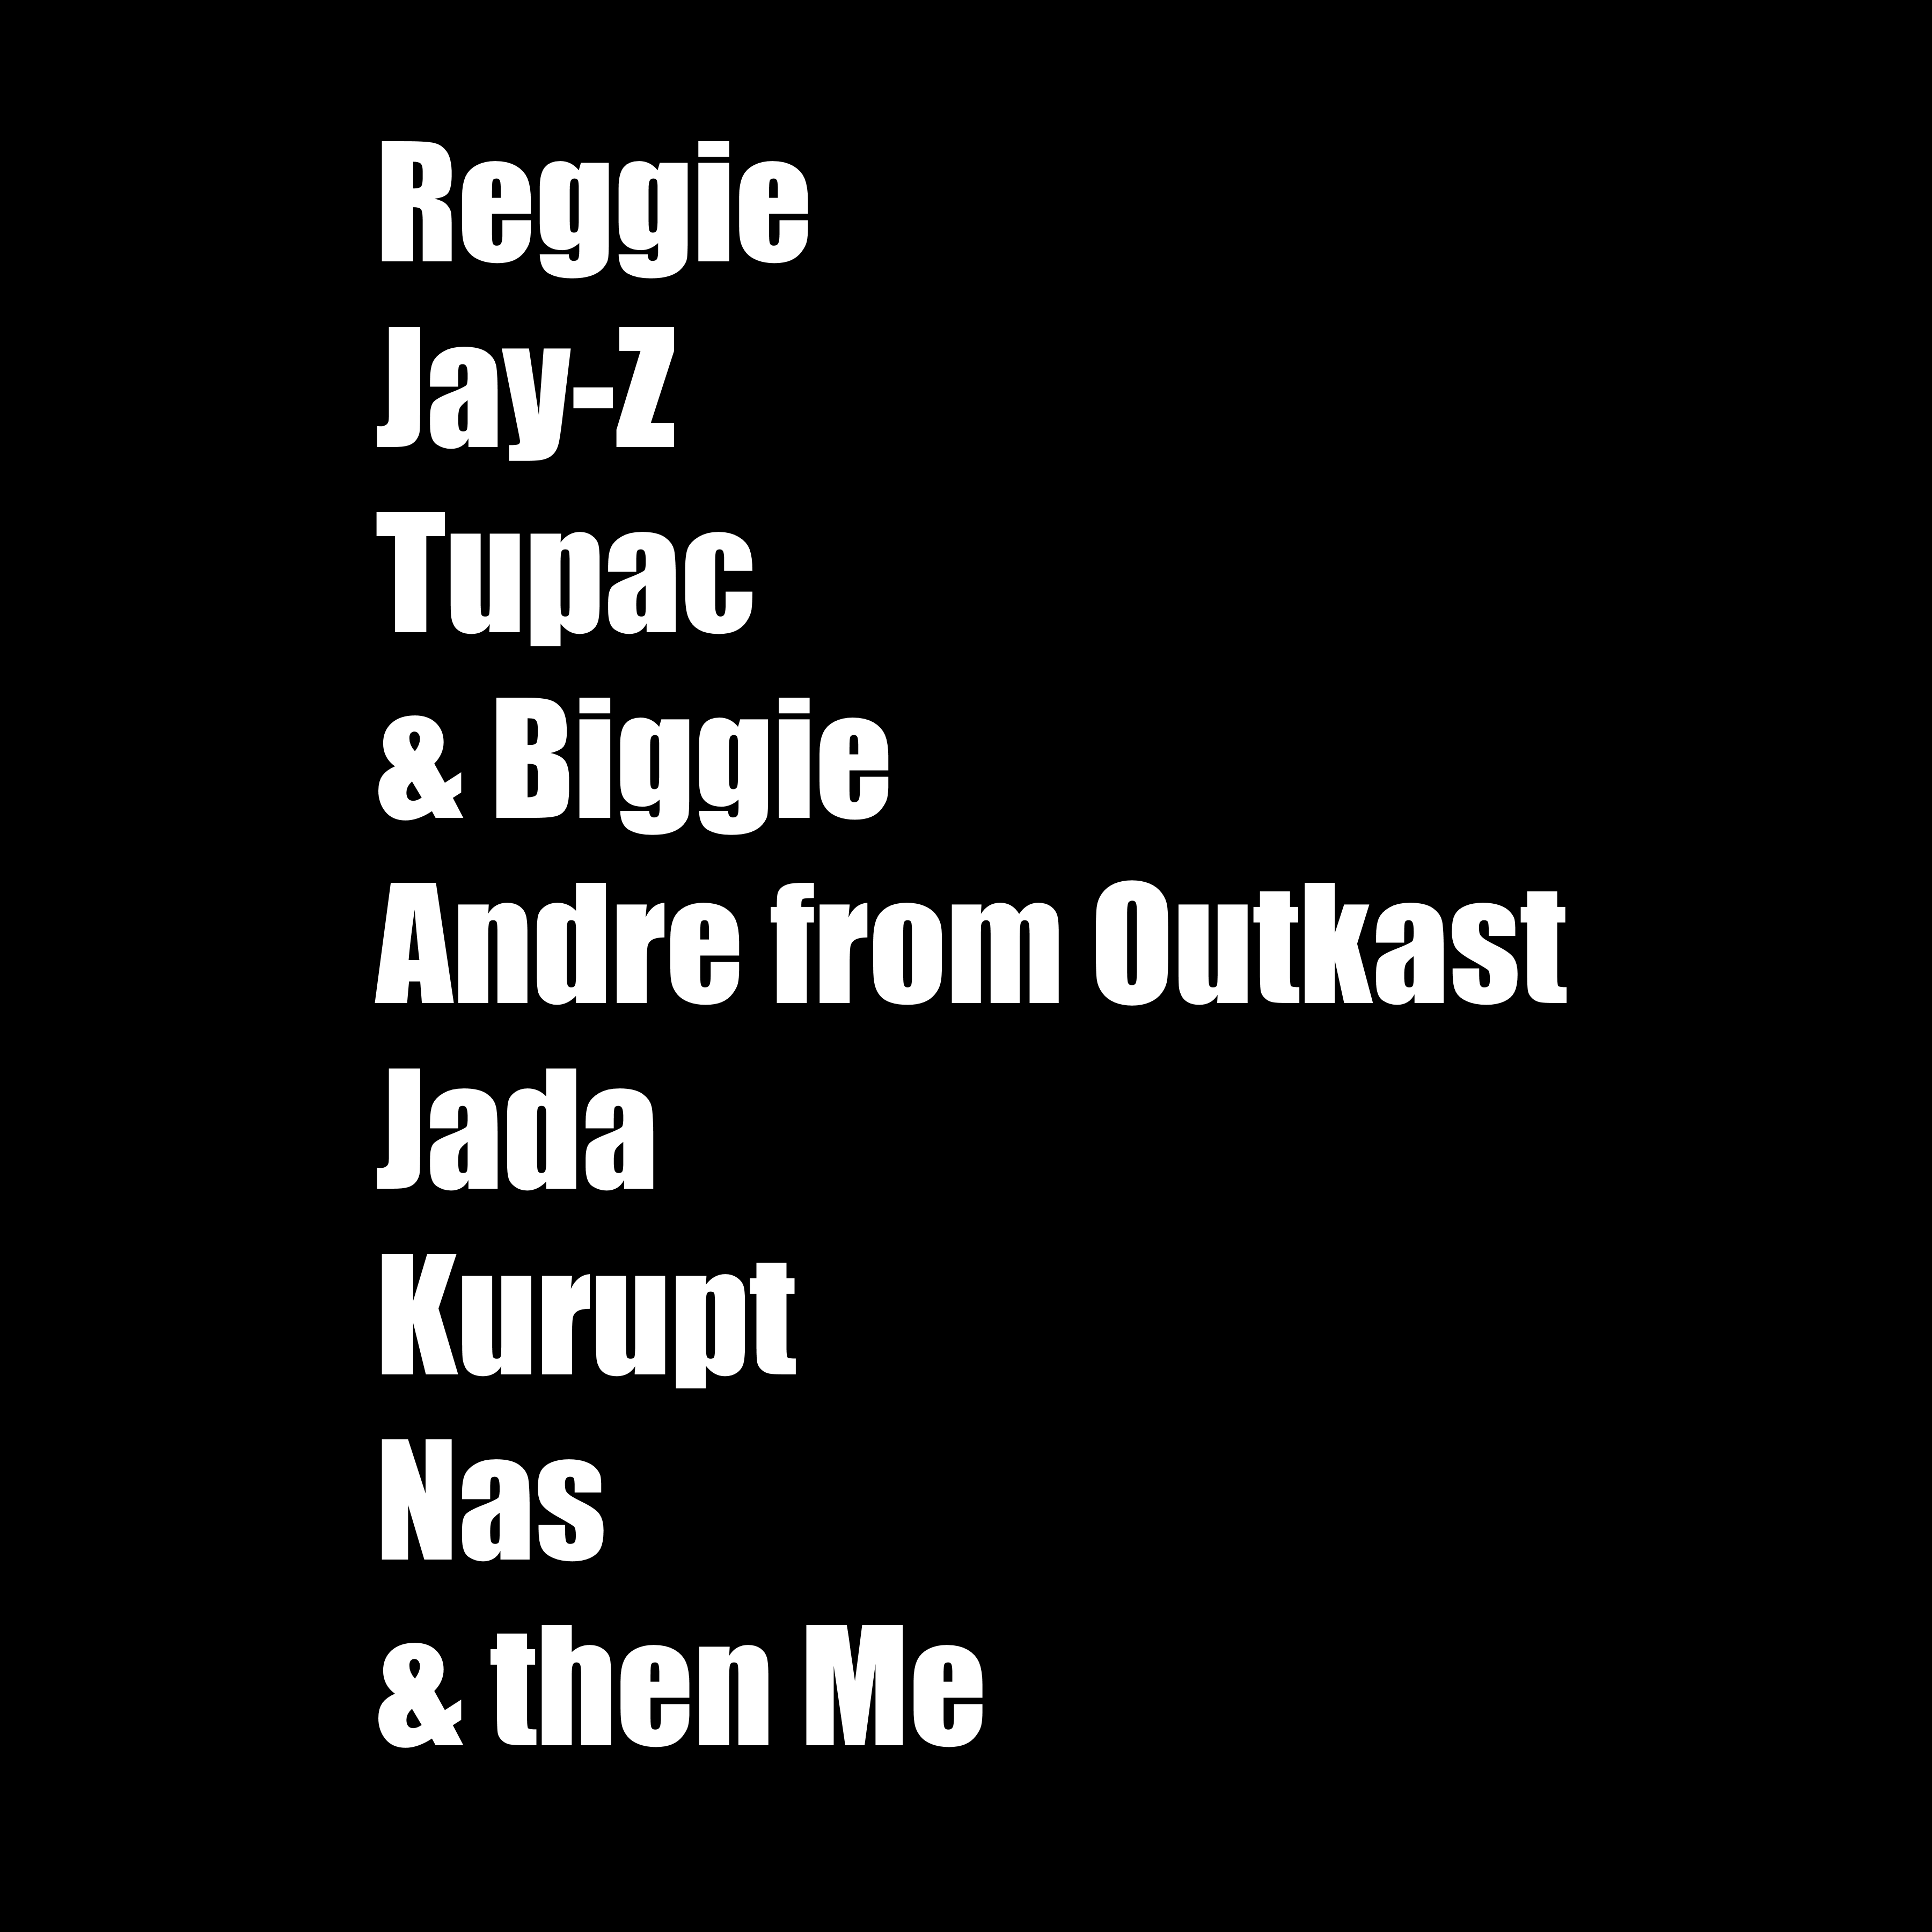 Reggie, Jay-Z, Tupac, & Biggie, Andre from Outkast, Jada, Kurupt, Nas, & then Me